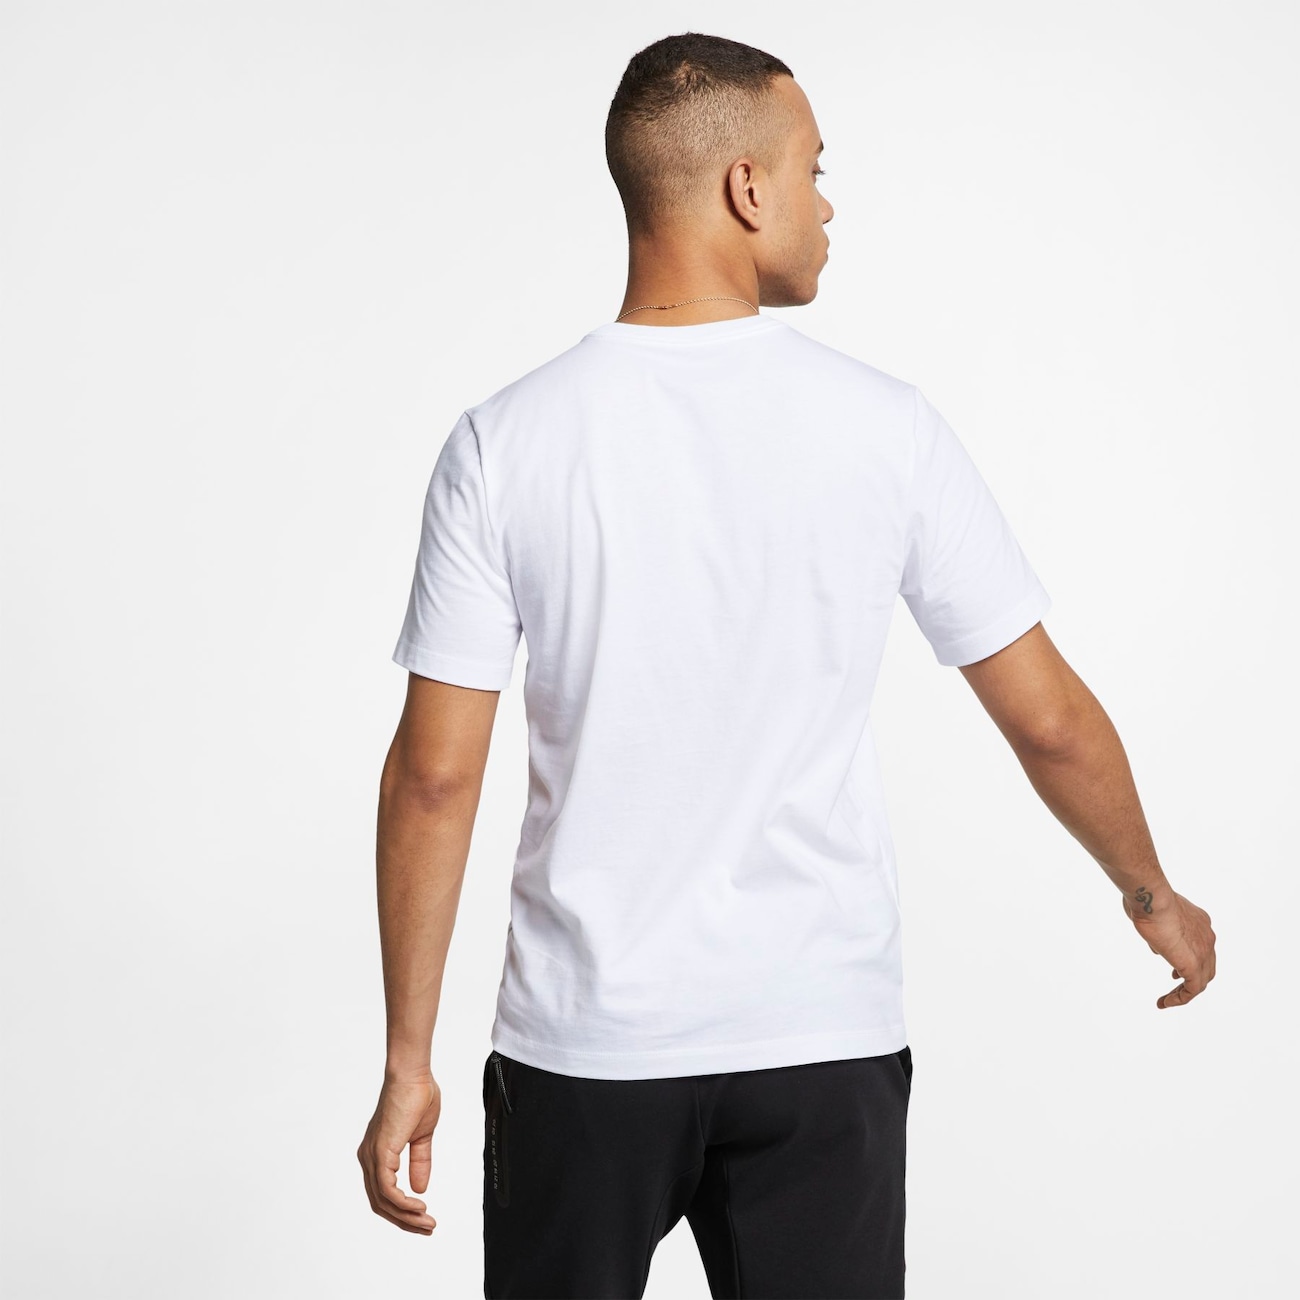 Camiseta Nike Tee Icon Futura - Masculina em Promoção